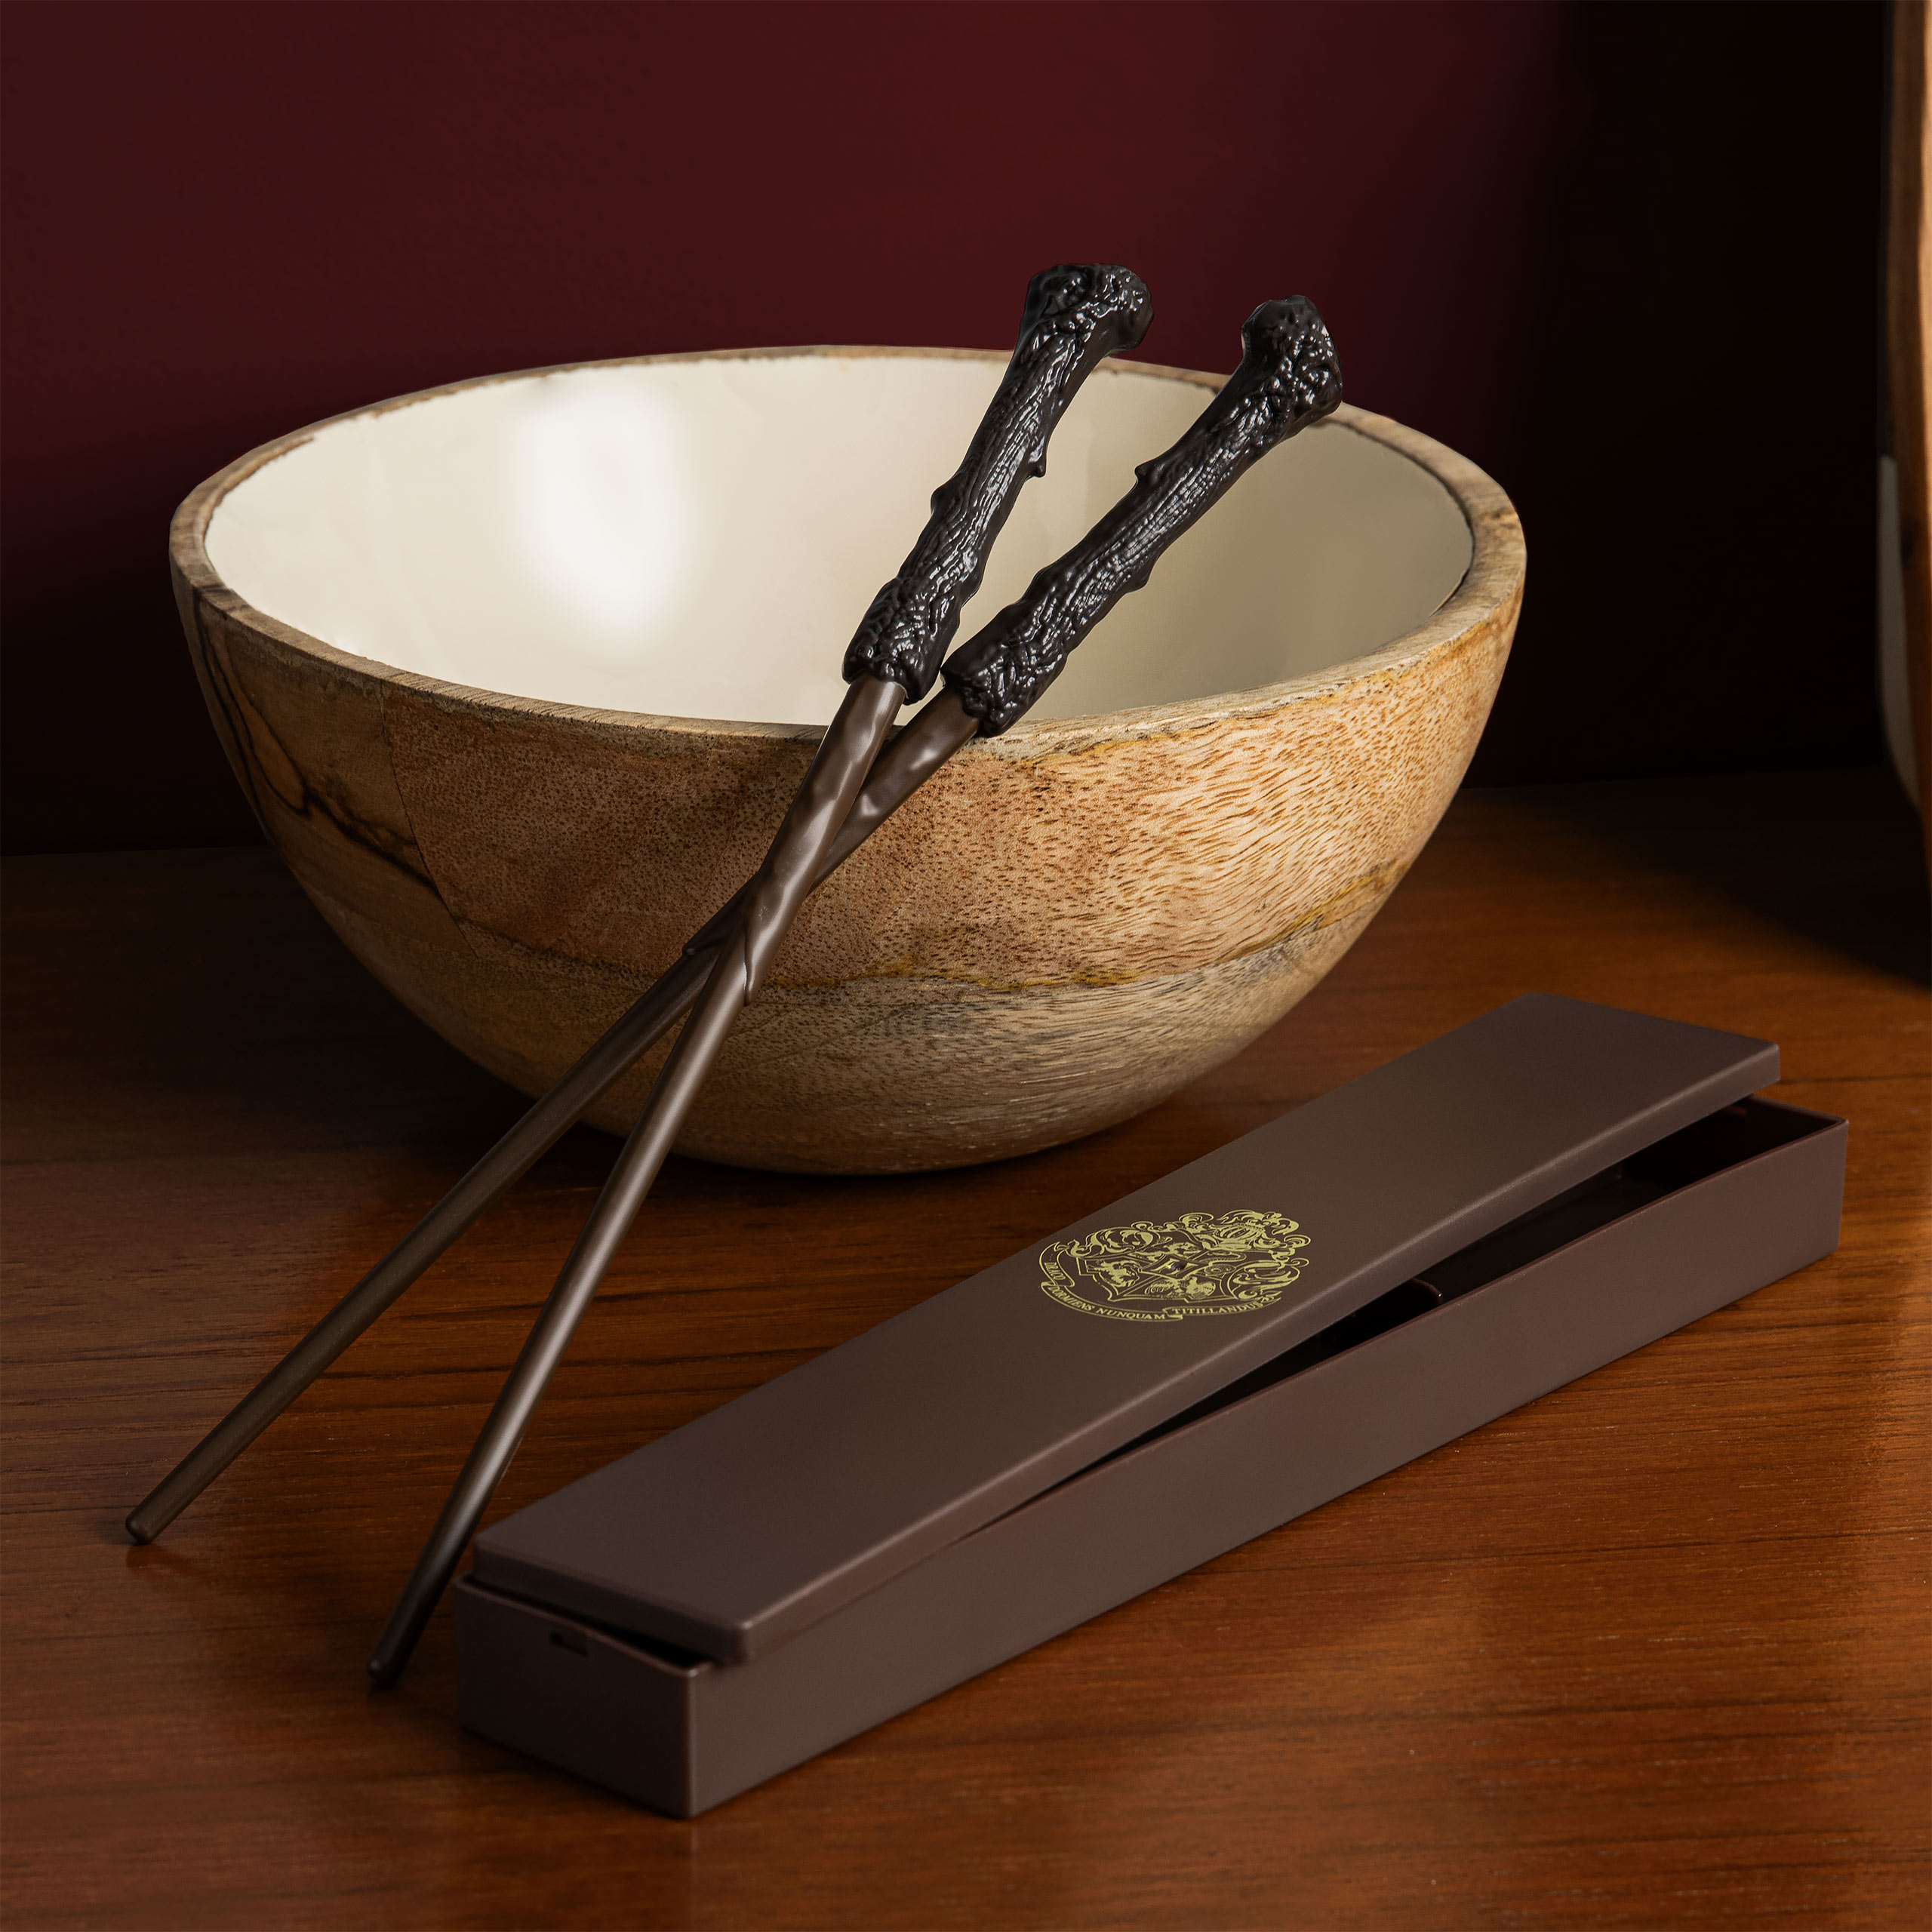 Harry Potter - Magic Wand Chopsticks